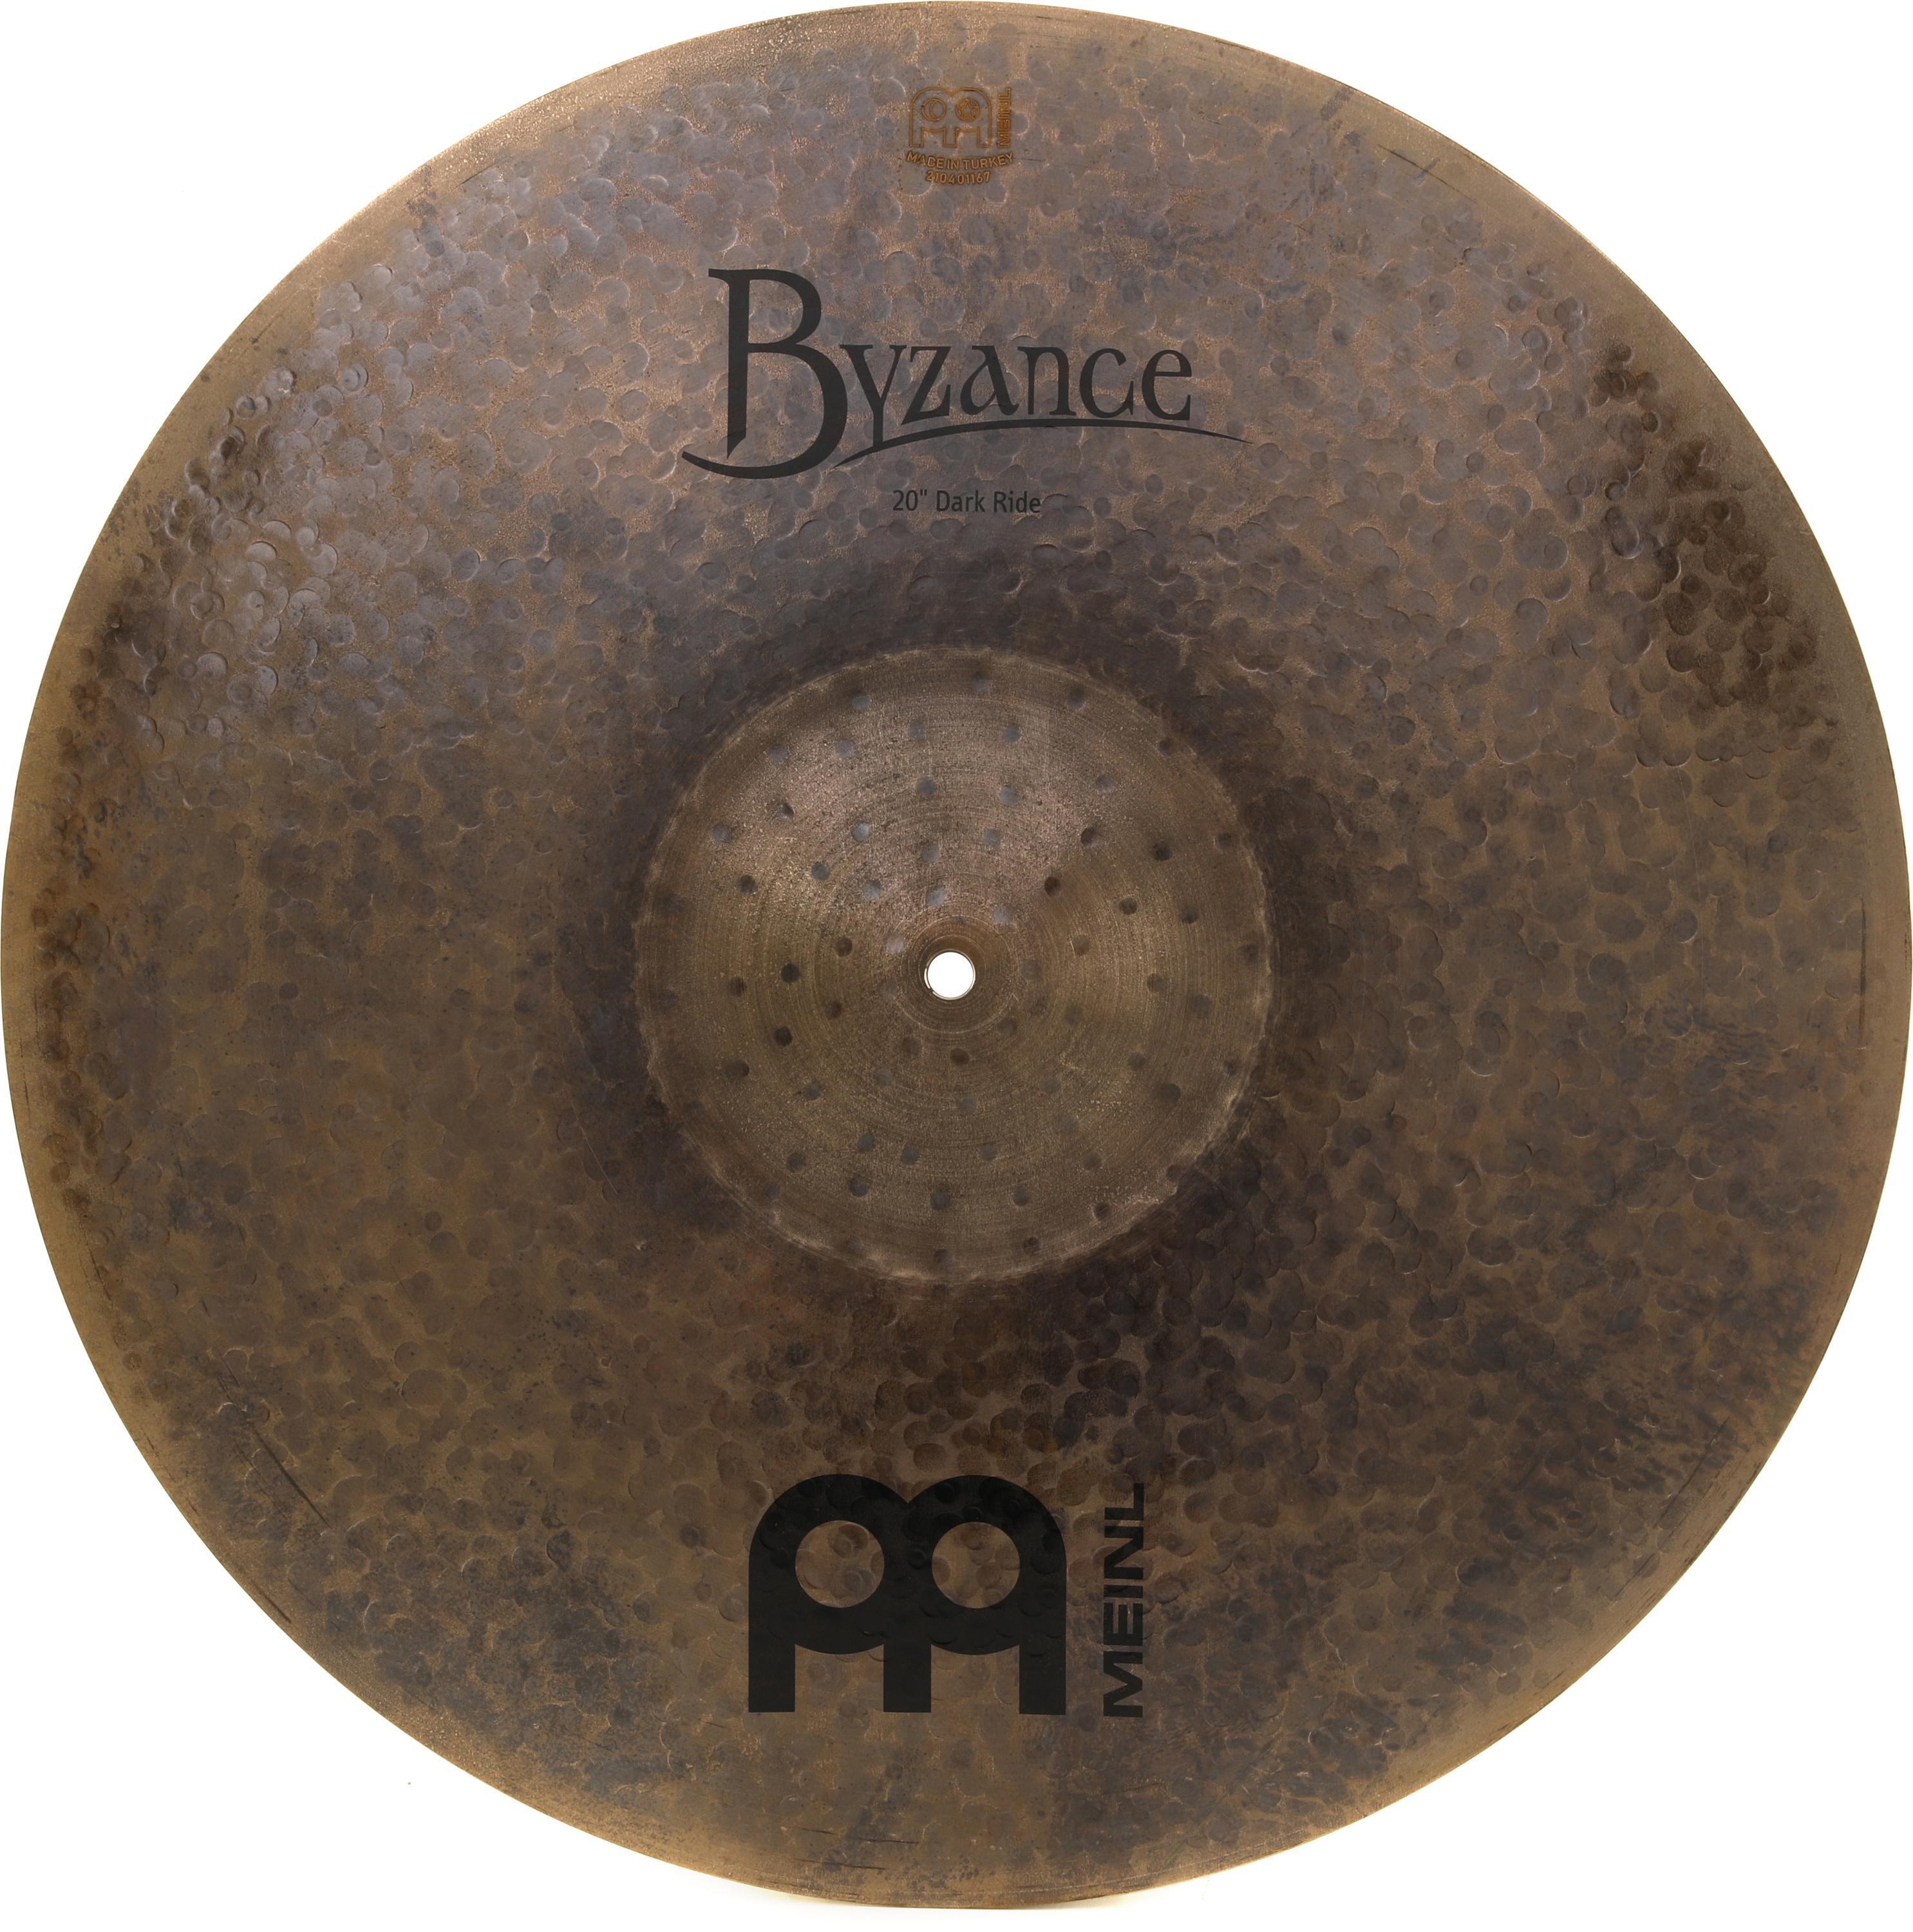 Meinl Cymbals 20 inch Byzance Dark Ride Cymbal